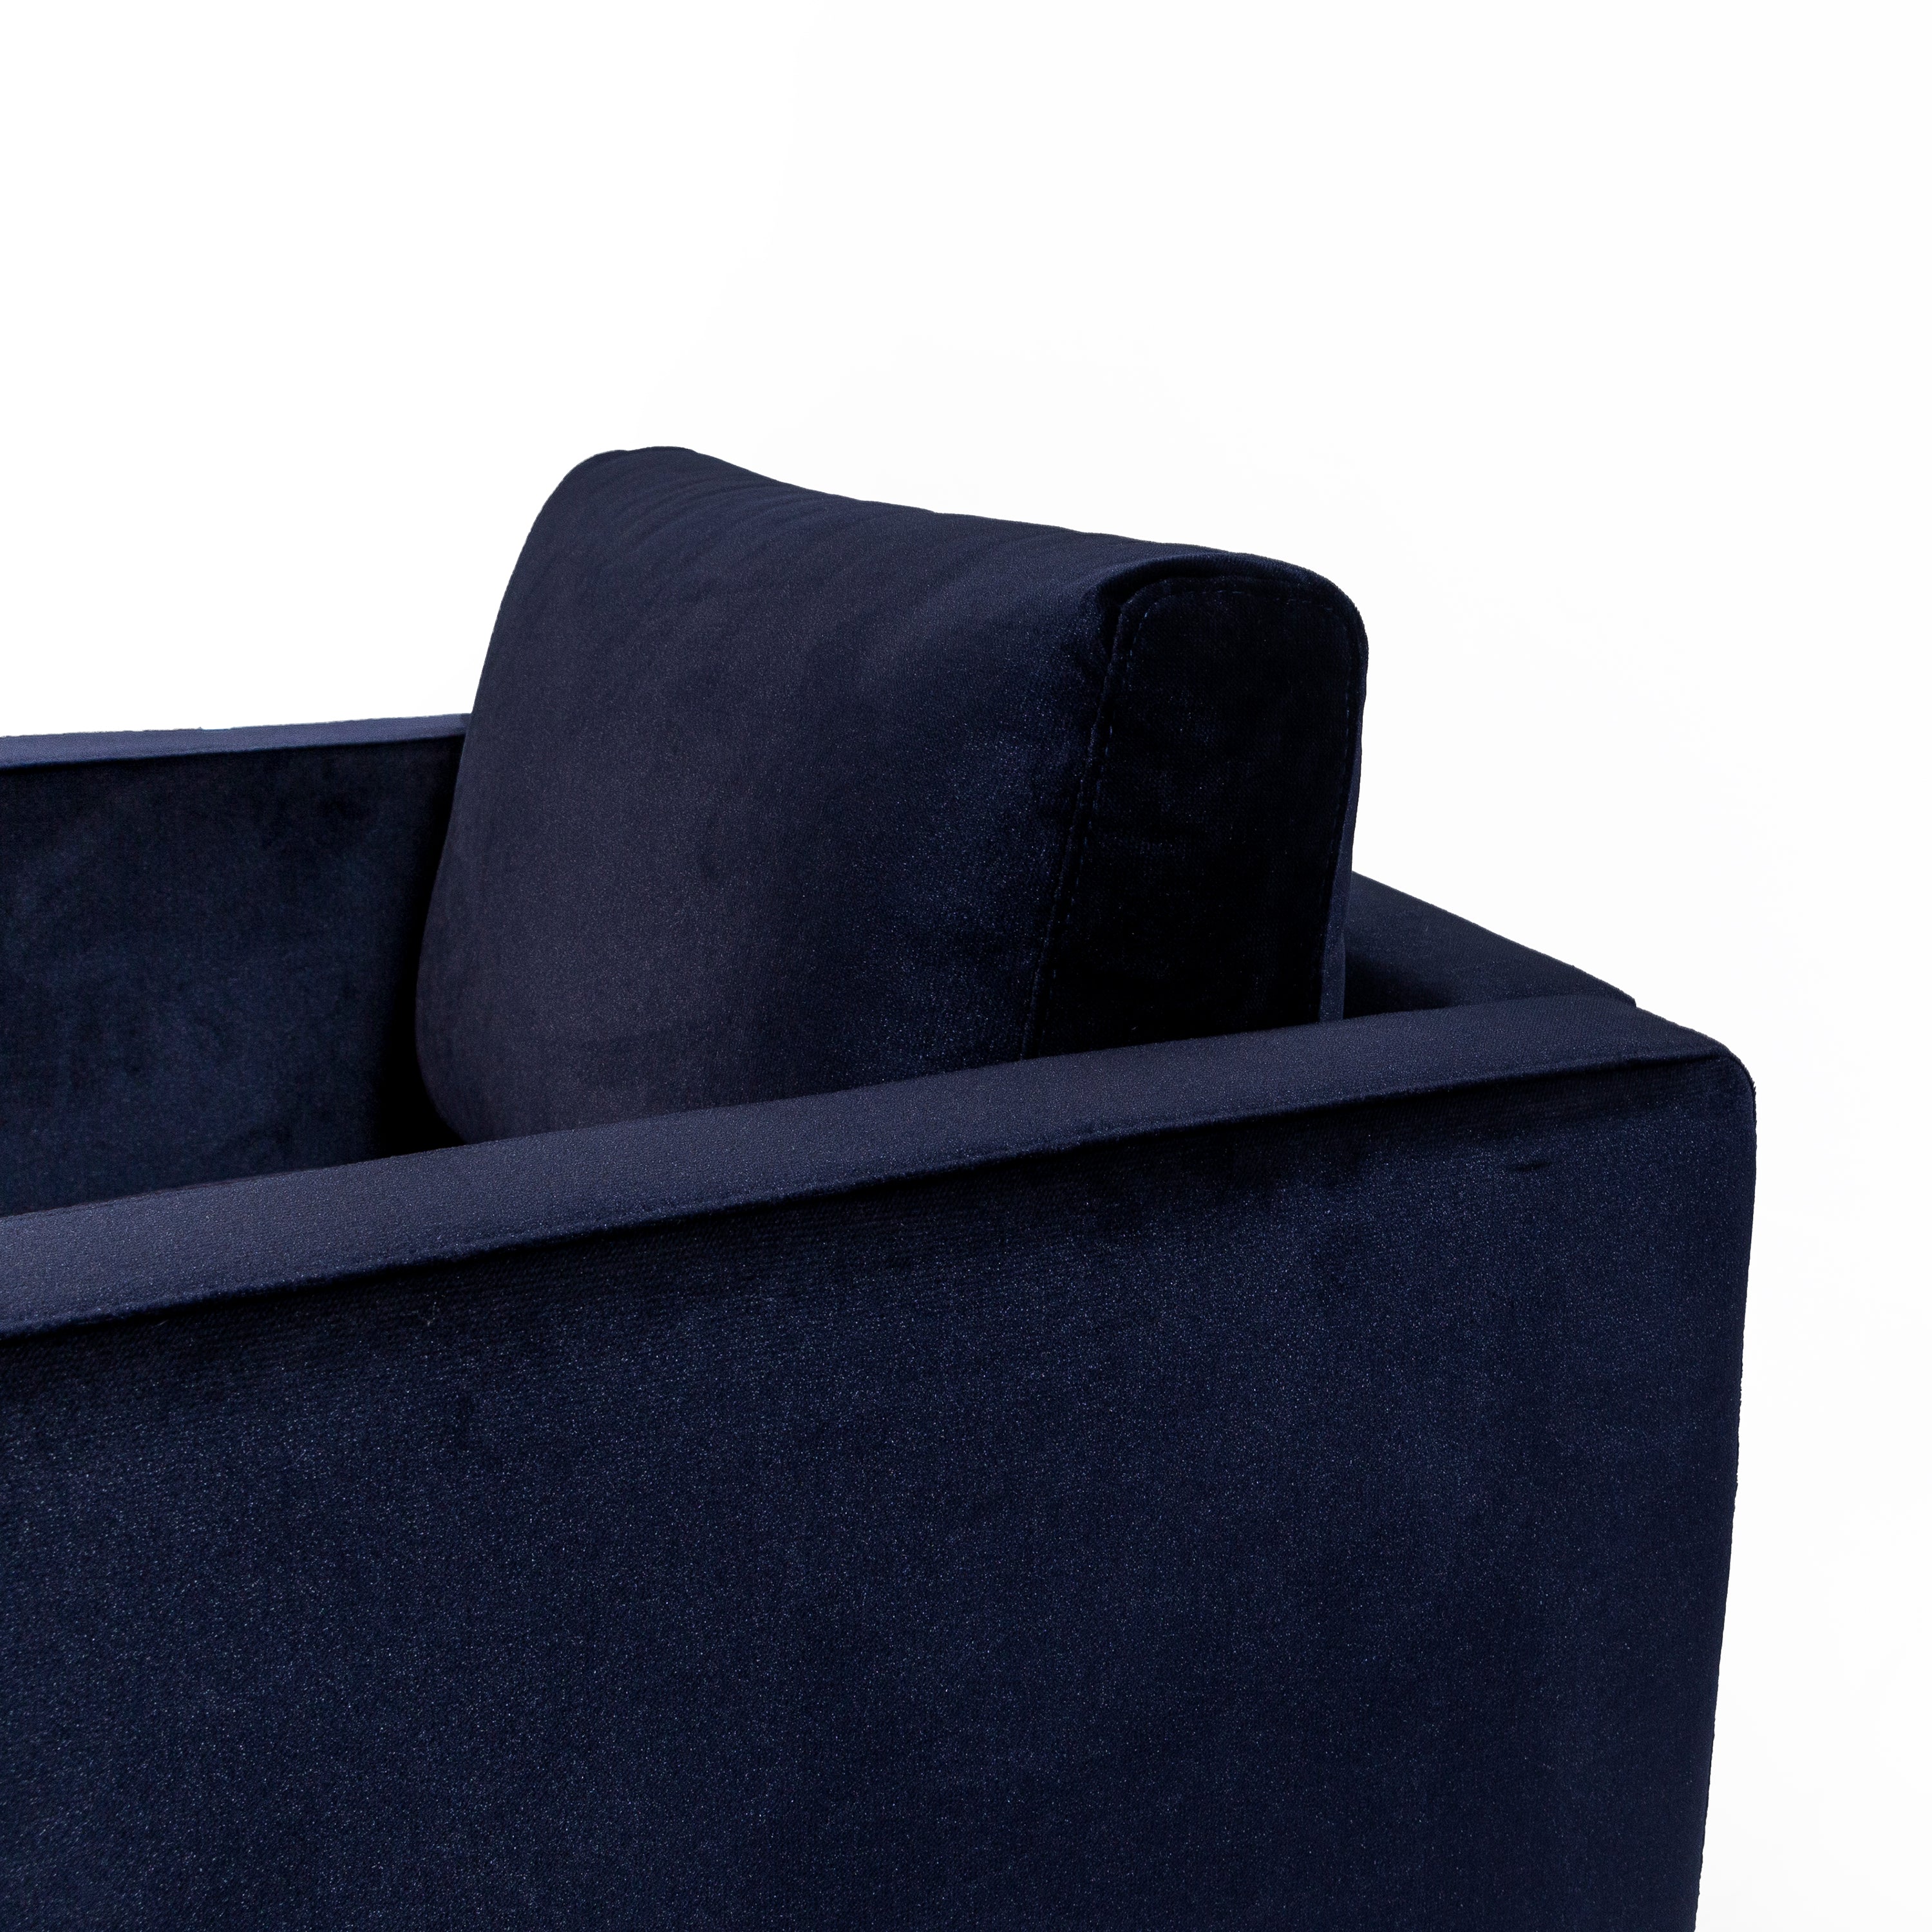 1 zits fauteuil stof Smooth Velvet S917 blauw Default Title